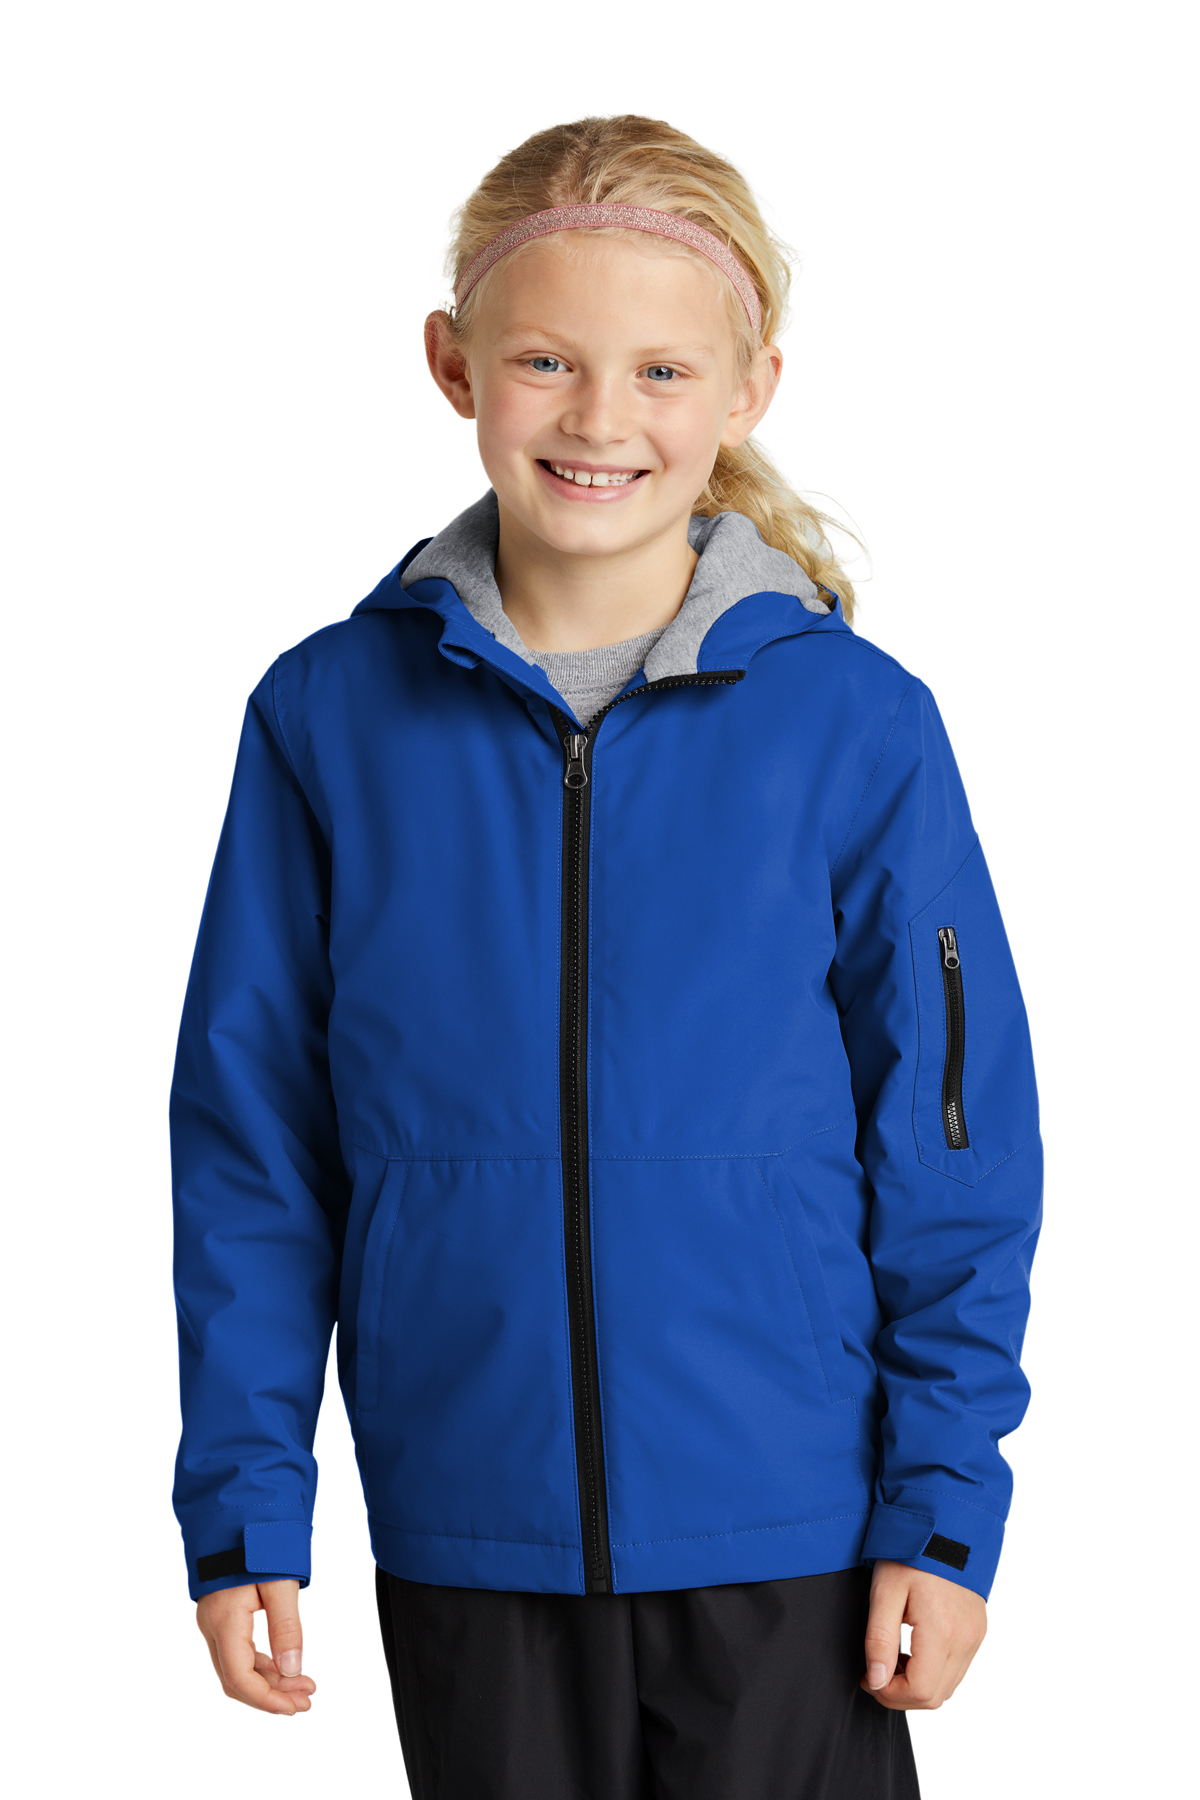 Sport-Tek Youth Waterproof Insulated Jacket | Product | SanMar